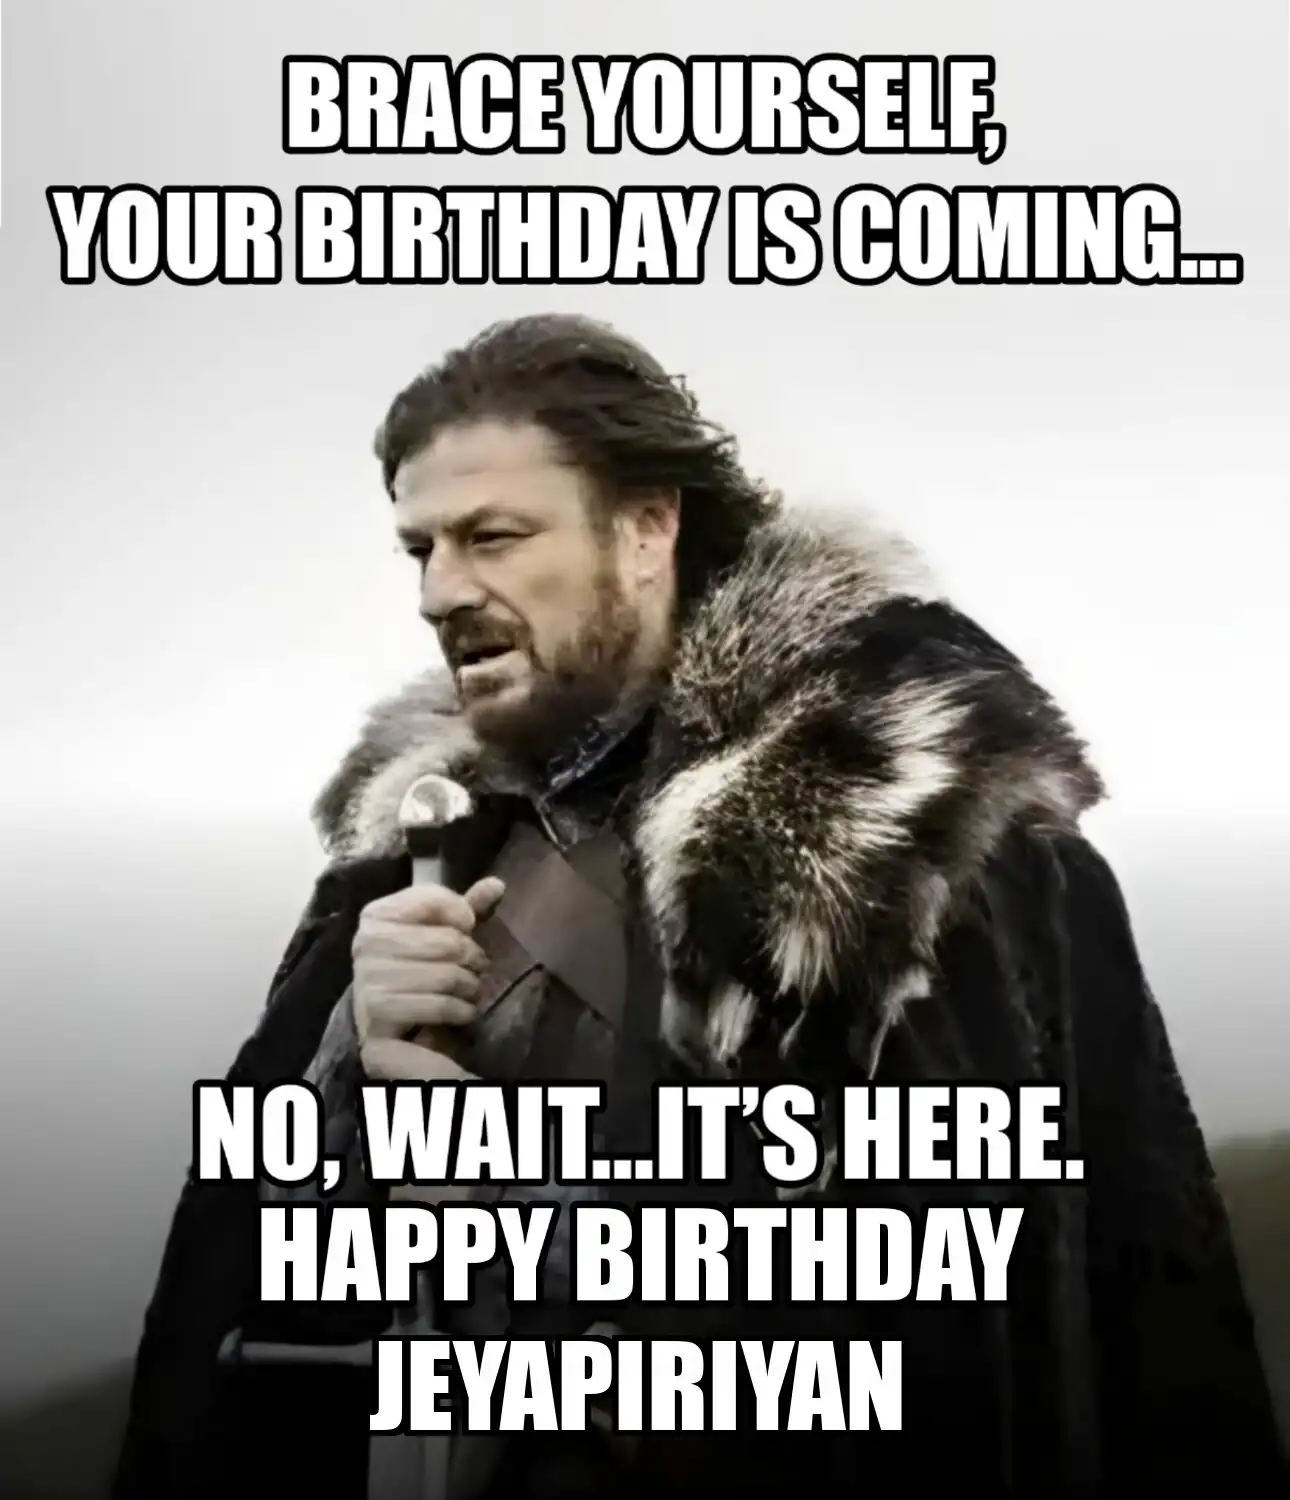 Happy Birthday Jeyapiriyan Brace Yourself Your Birthday Is Coming Meme